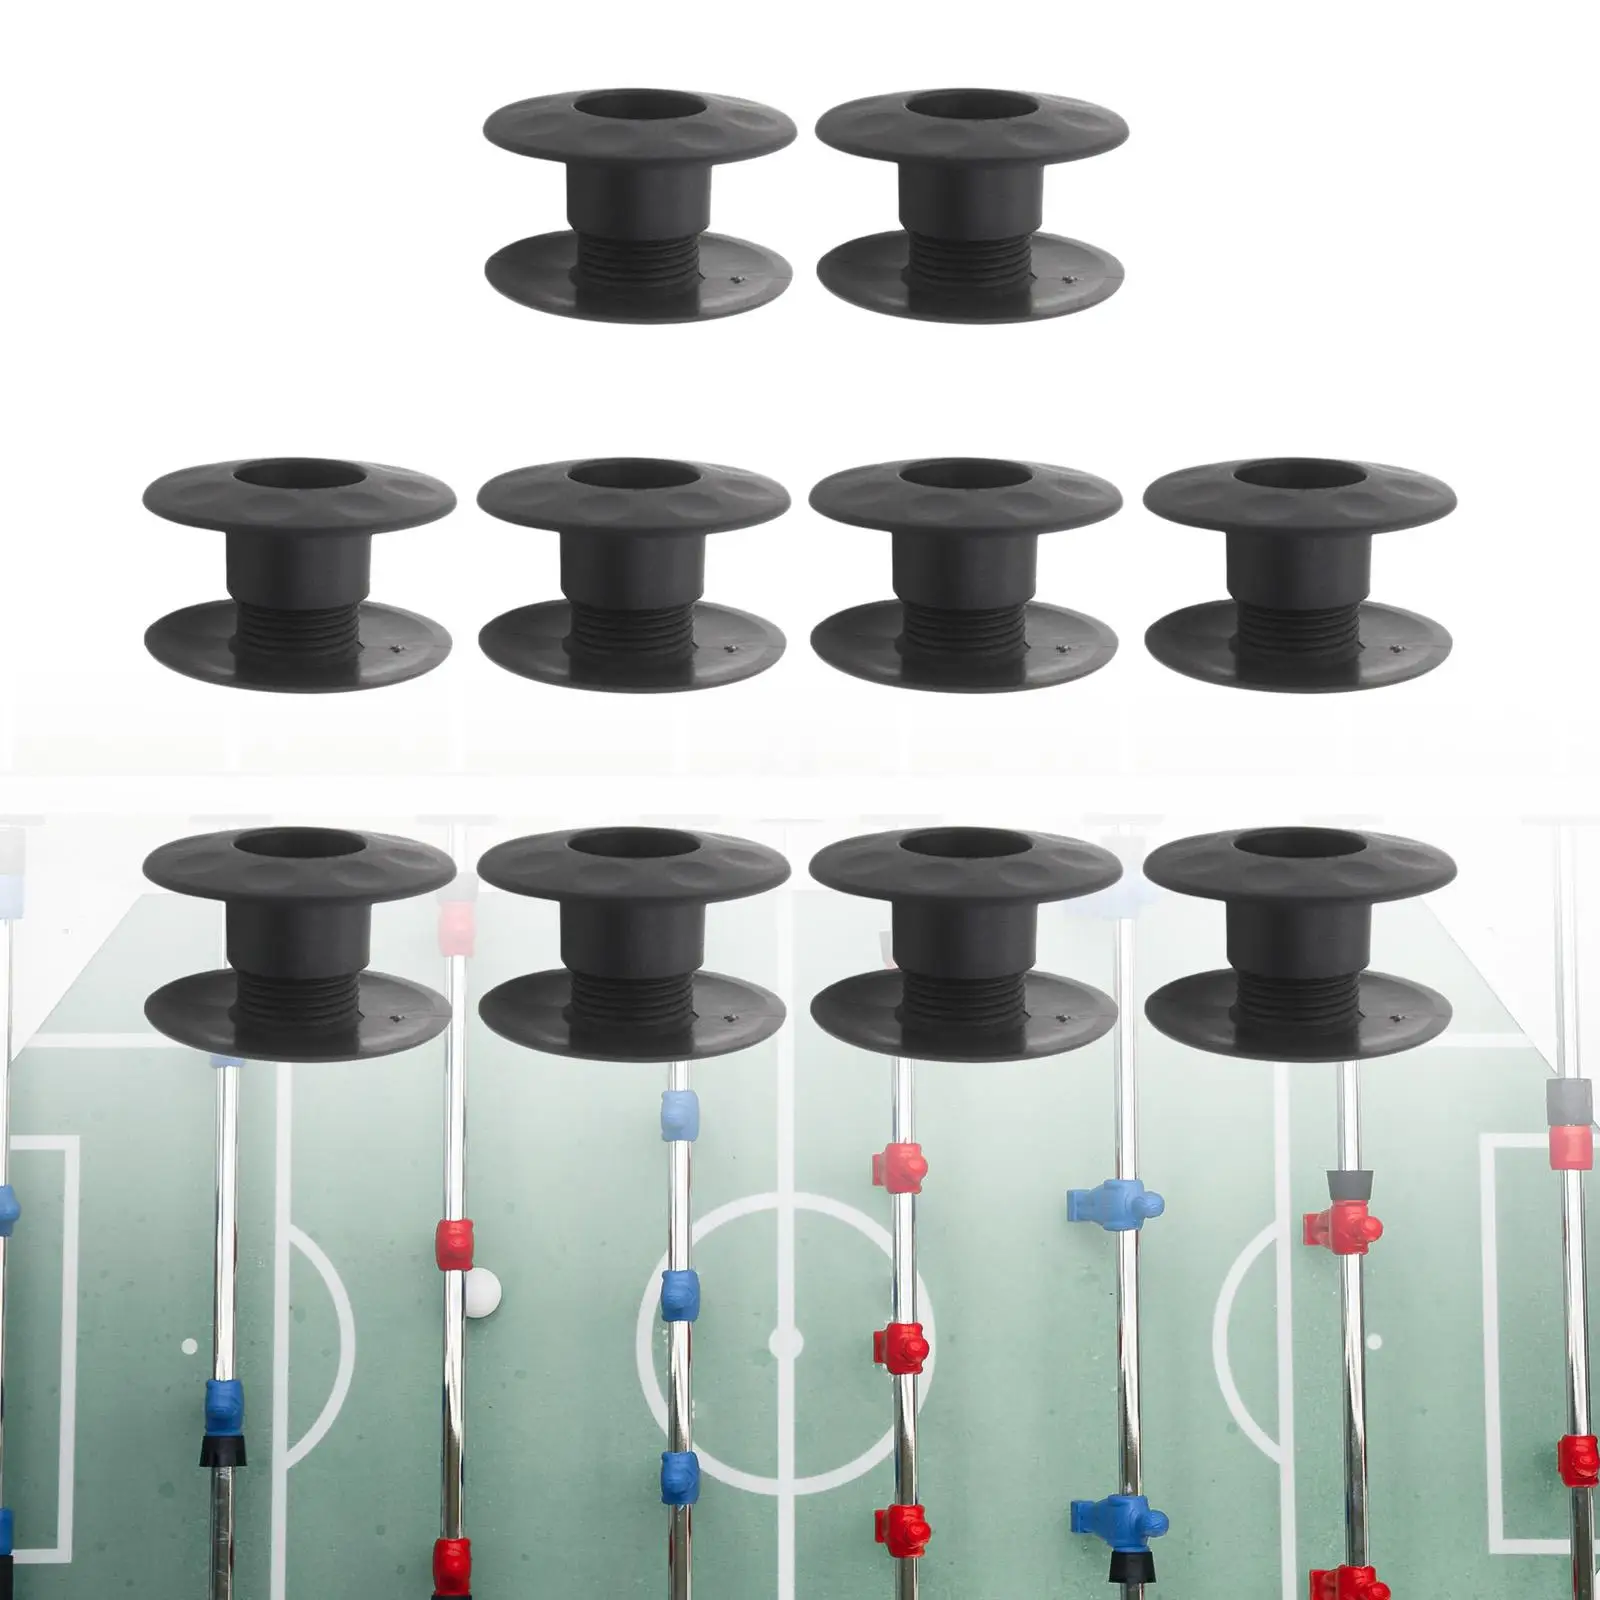 10 Pieces Foosball Machine Bearing Rods Replacement for Standard Foosball Tables Foosball Table Board Bearing Rod Soccer Games